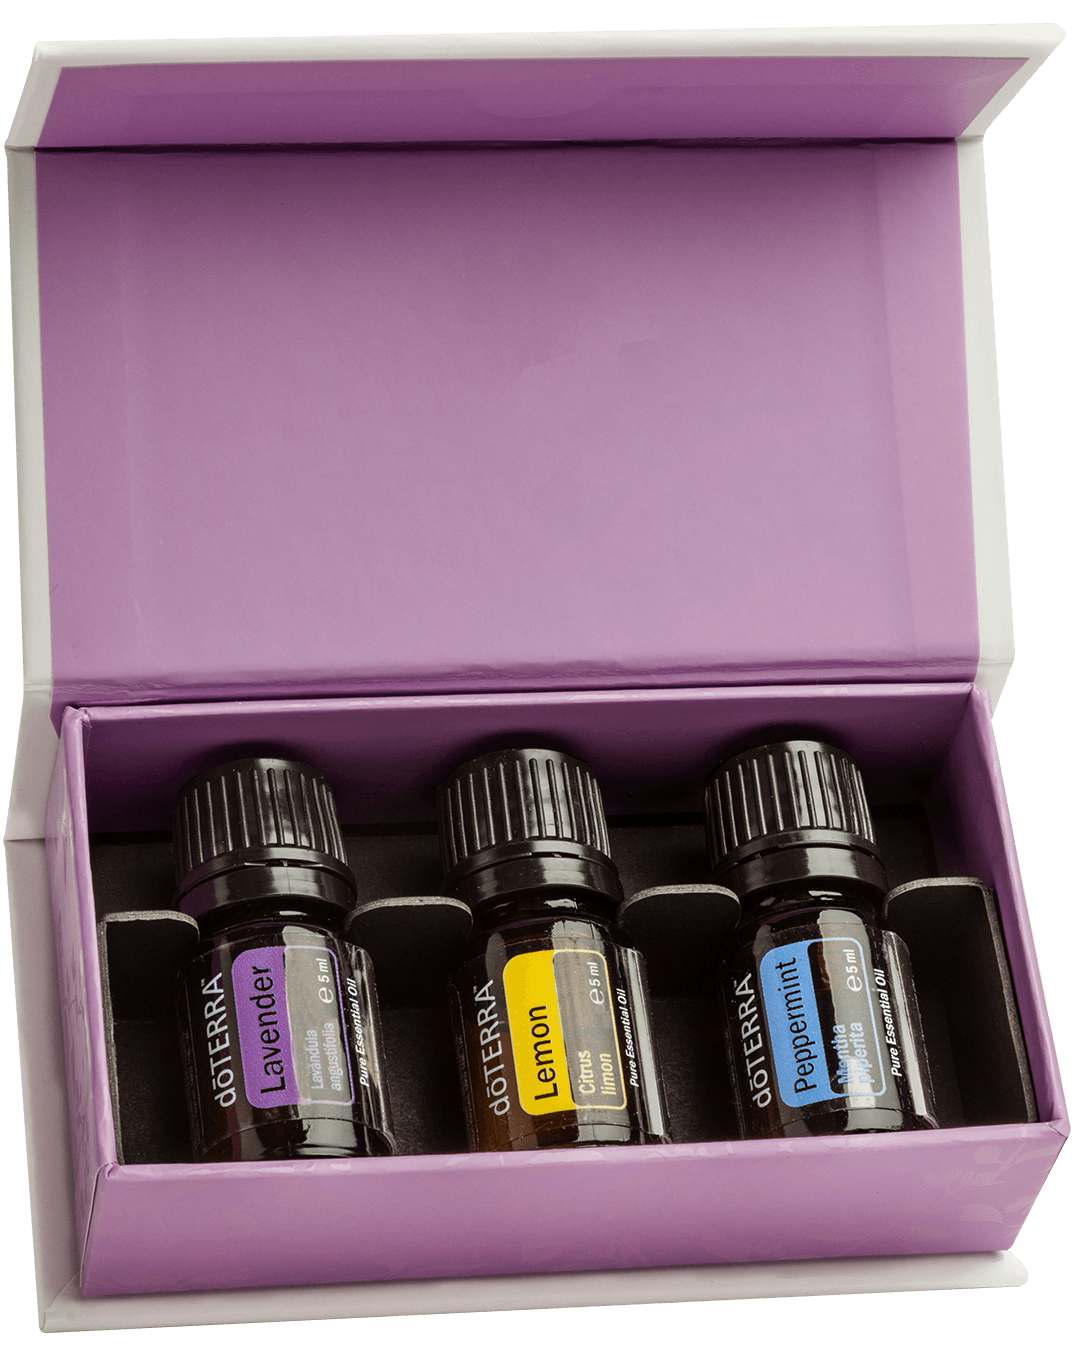 Lavender Mist Trio Essential Oil Kit